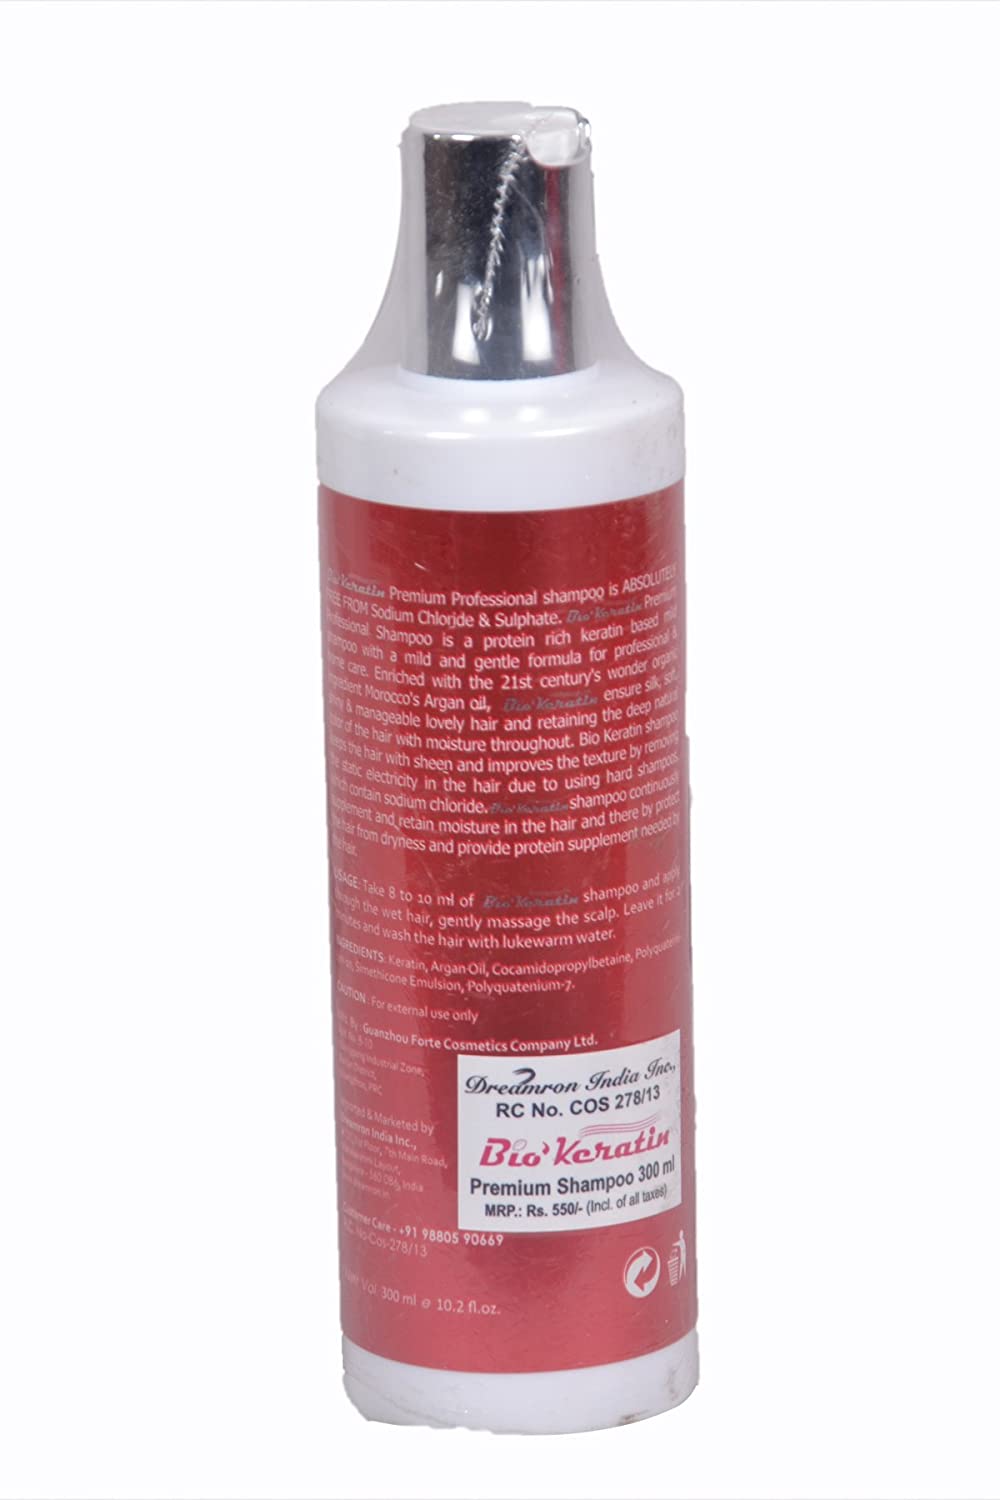 Bio-Keratin -  Keratin & Argan oil premium shampoo - 1 L